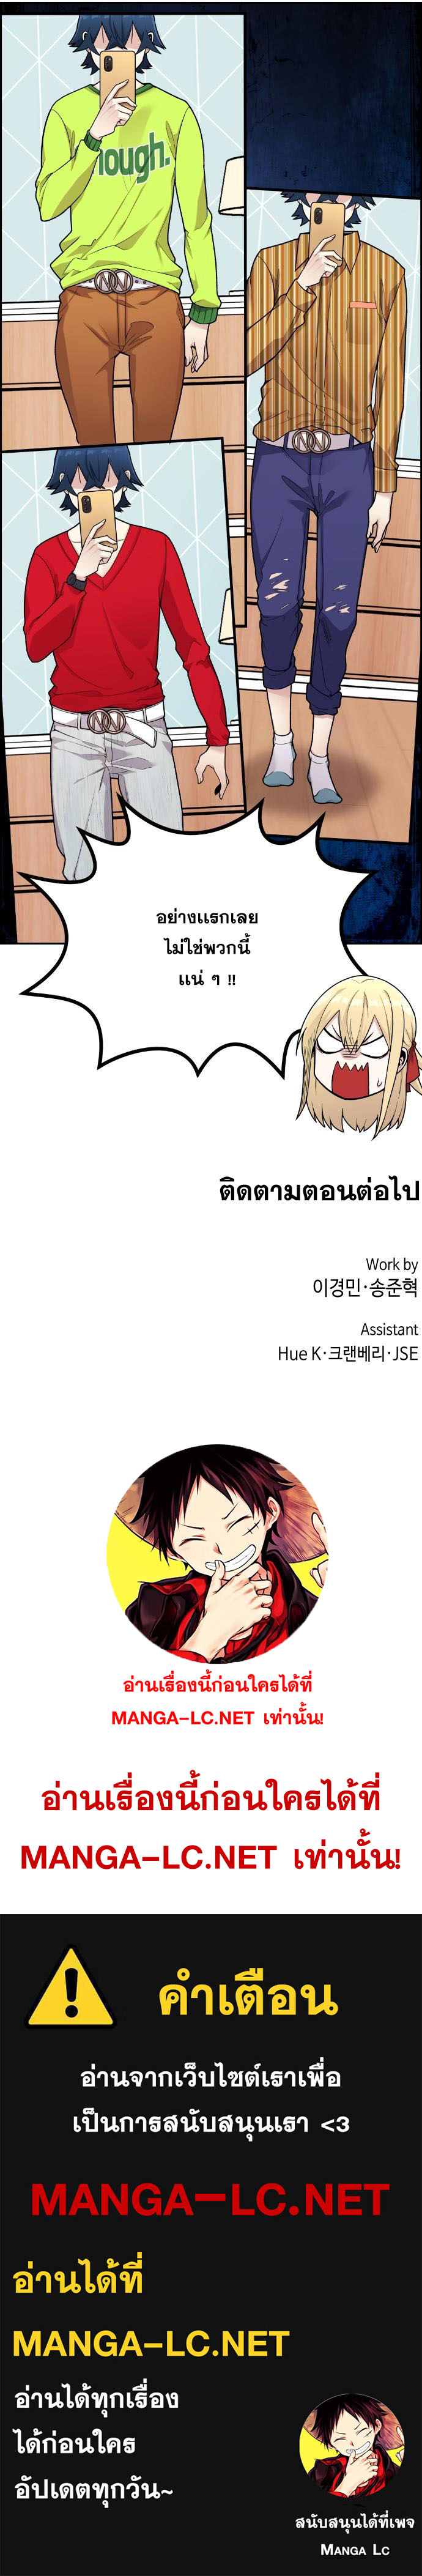 Webtoon Character Na Kang Lim ร ยธโ€ขร ยธยญร ยธโขร ยธโ€”ร ยธยตร ยนห 15 (14)